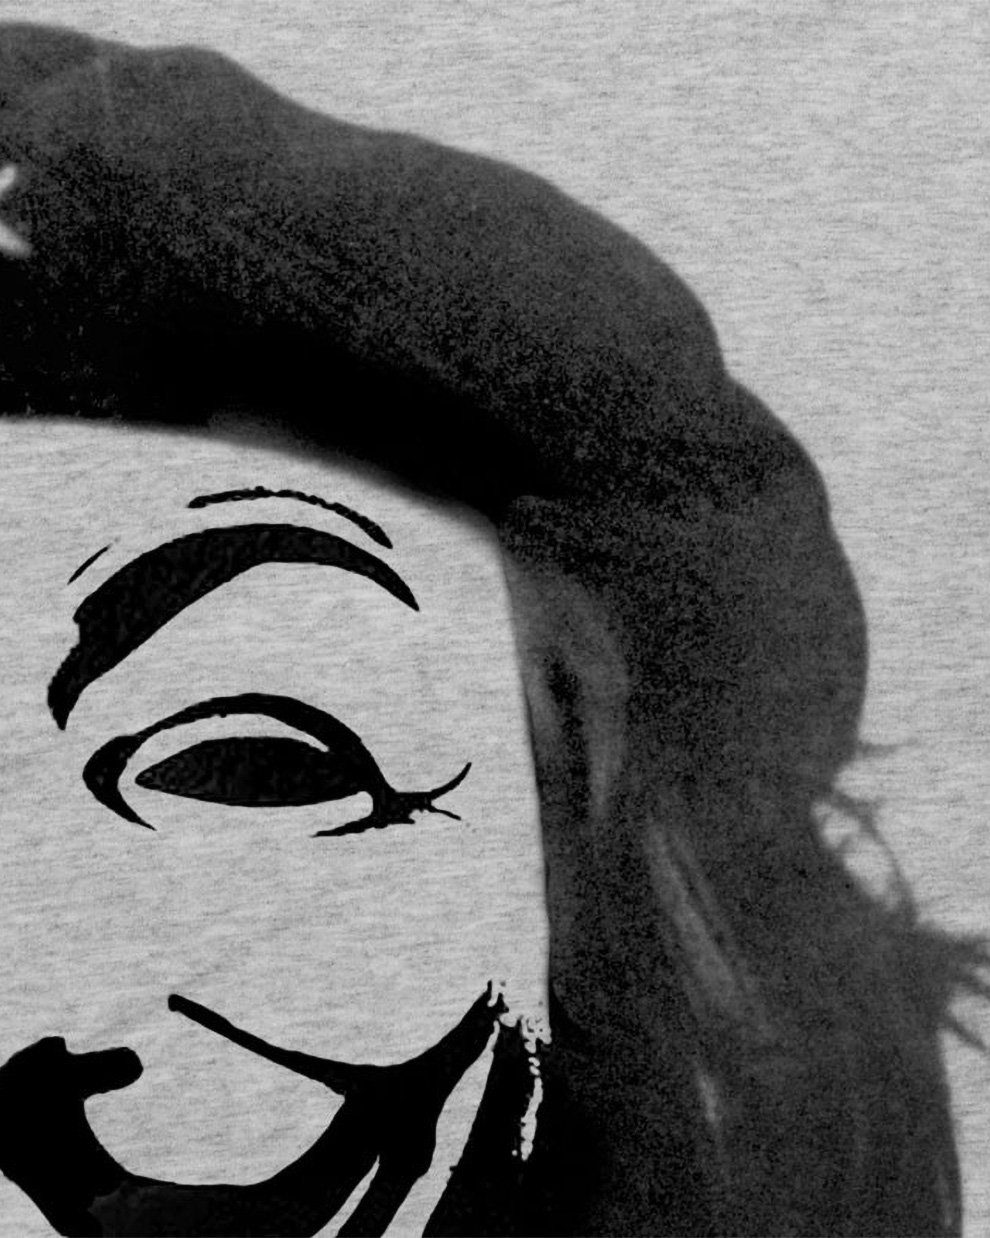 kuba Herren Guevara Print-Shirt meliert maske g8 style3 guy Anonymous fawkes guy grau fawkes Che hacker occupy T-Shirt